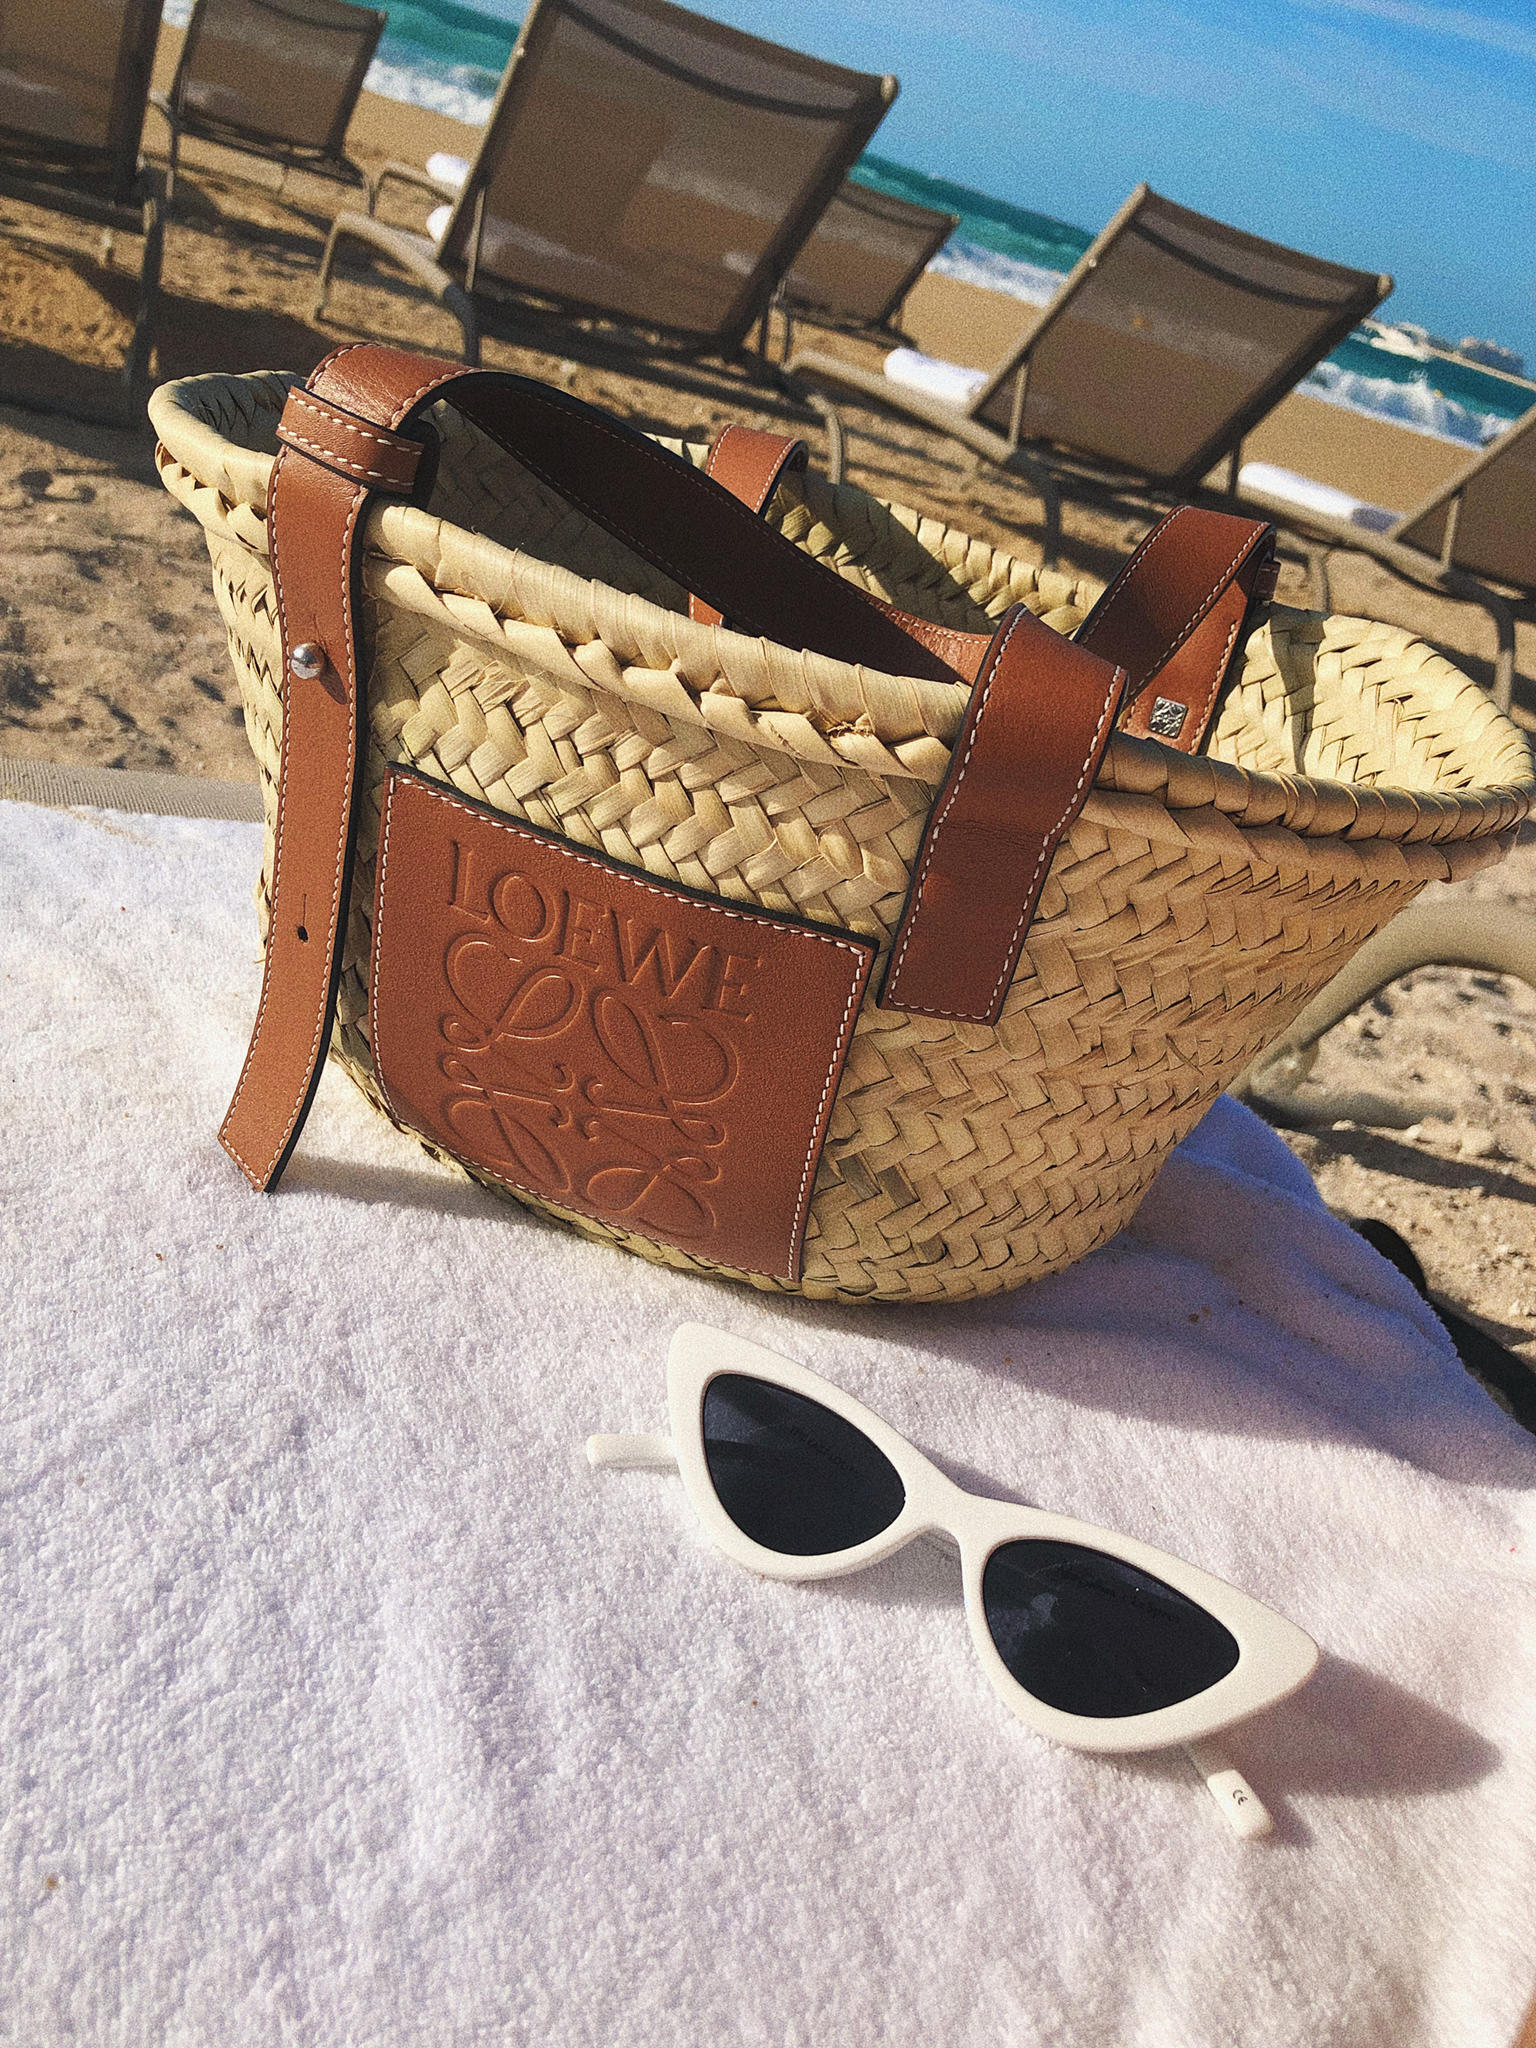 How to Spend 5 days in Dubai by Pam Hetlinger | TheGirlFromPanama.com | Dubai Travel Guide, Instagrammable spots dubai, fashion bloggers in dubai, cove beach dubai, loewe straw bag